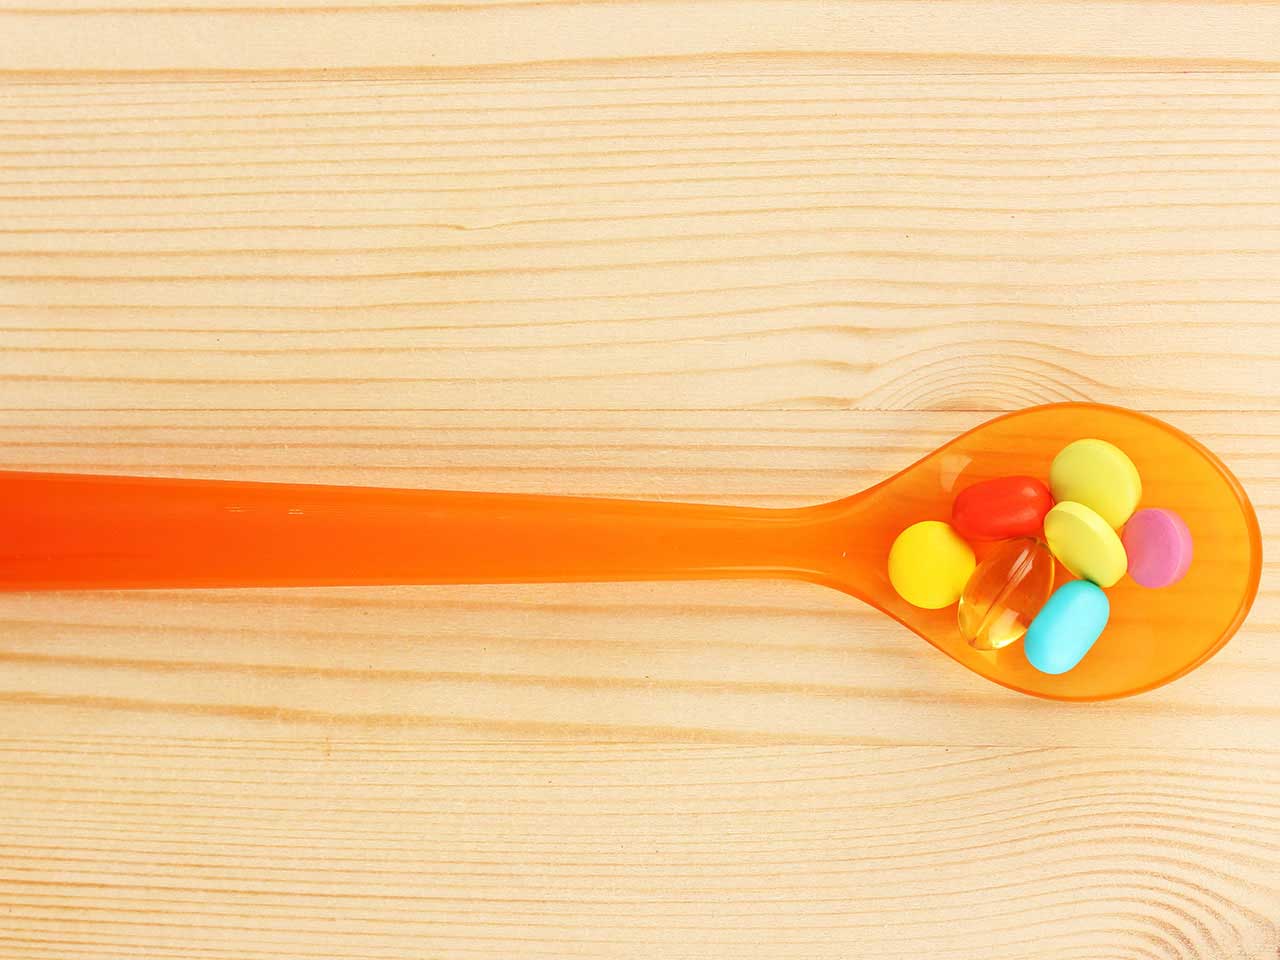 Spoon holding vitamins